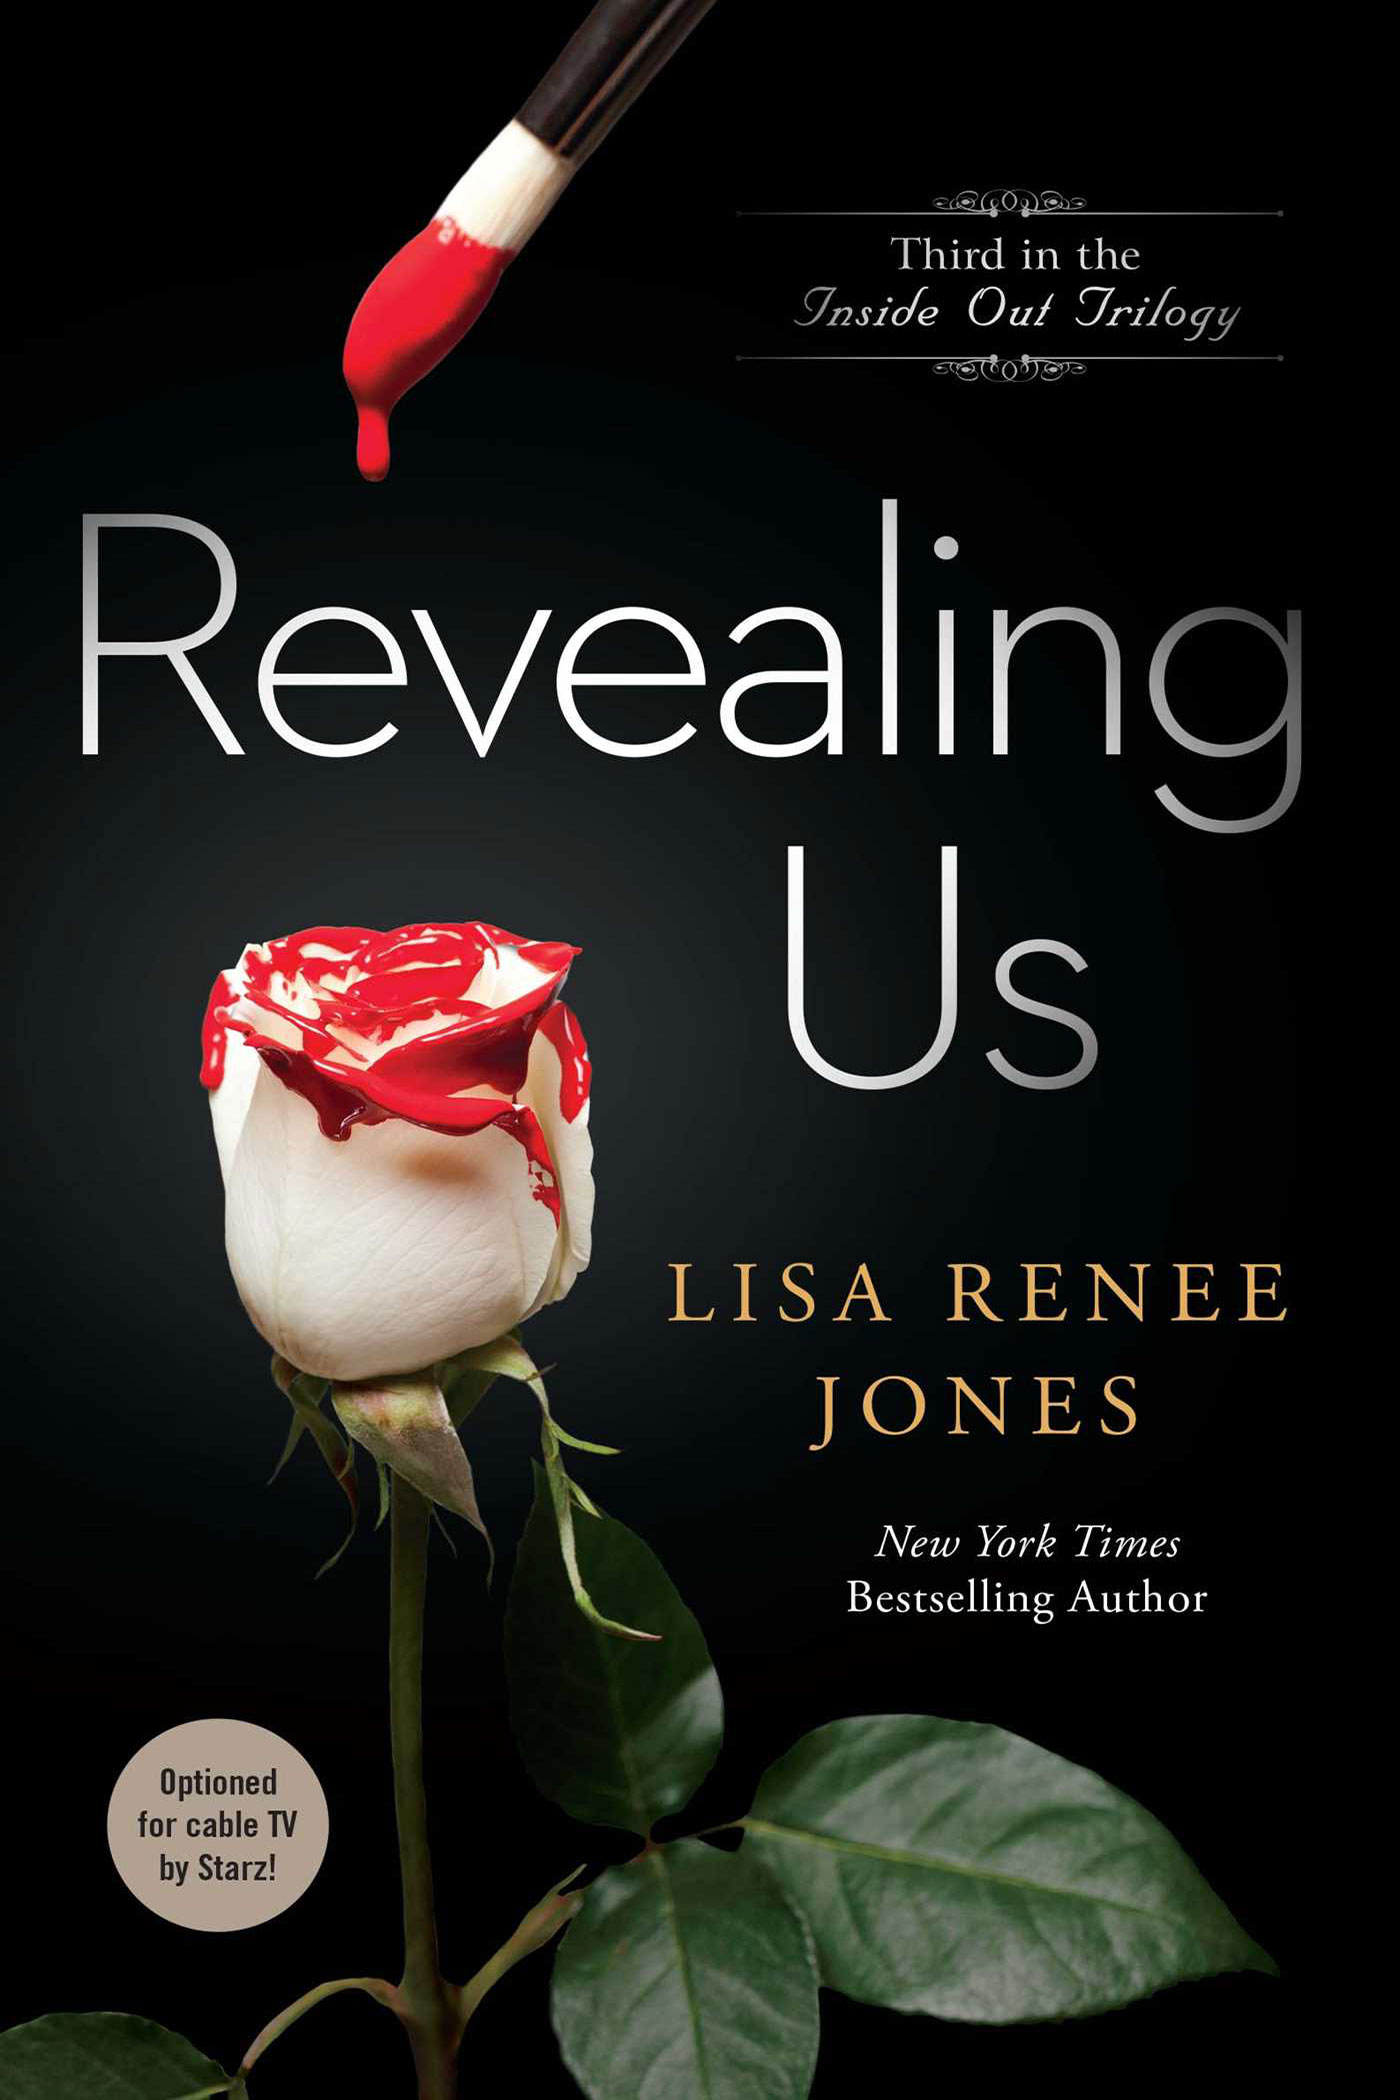 Revealing Us (The Inside Out Series #3) by Lisa Renee Jones